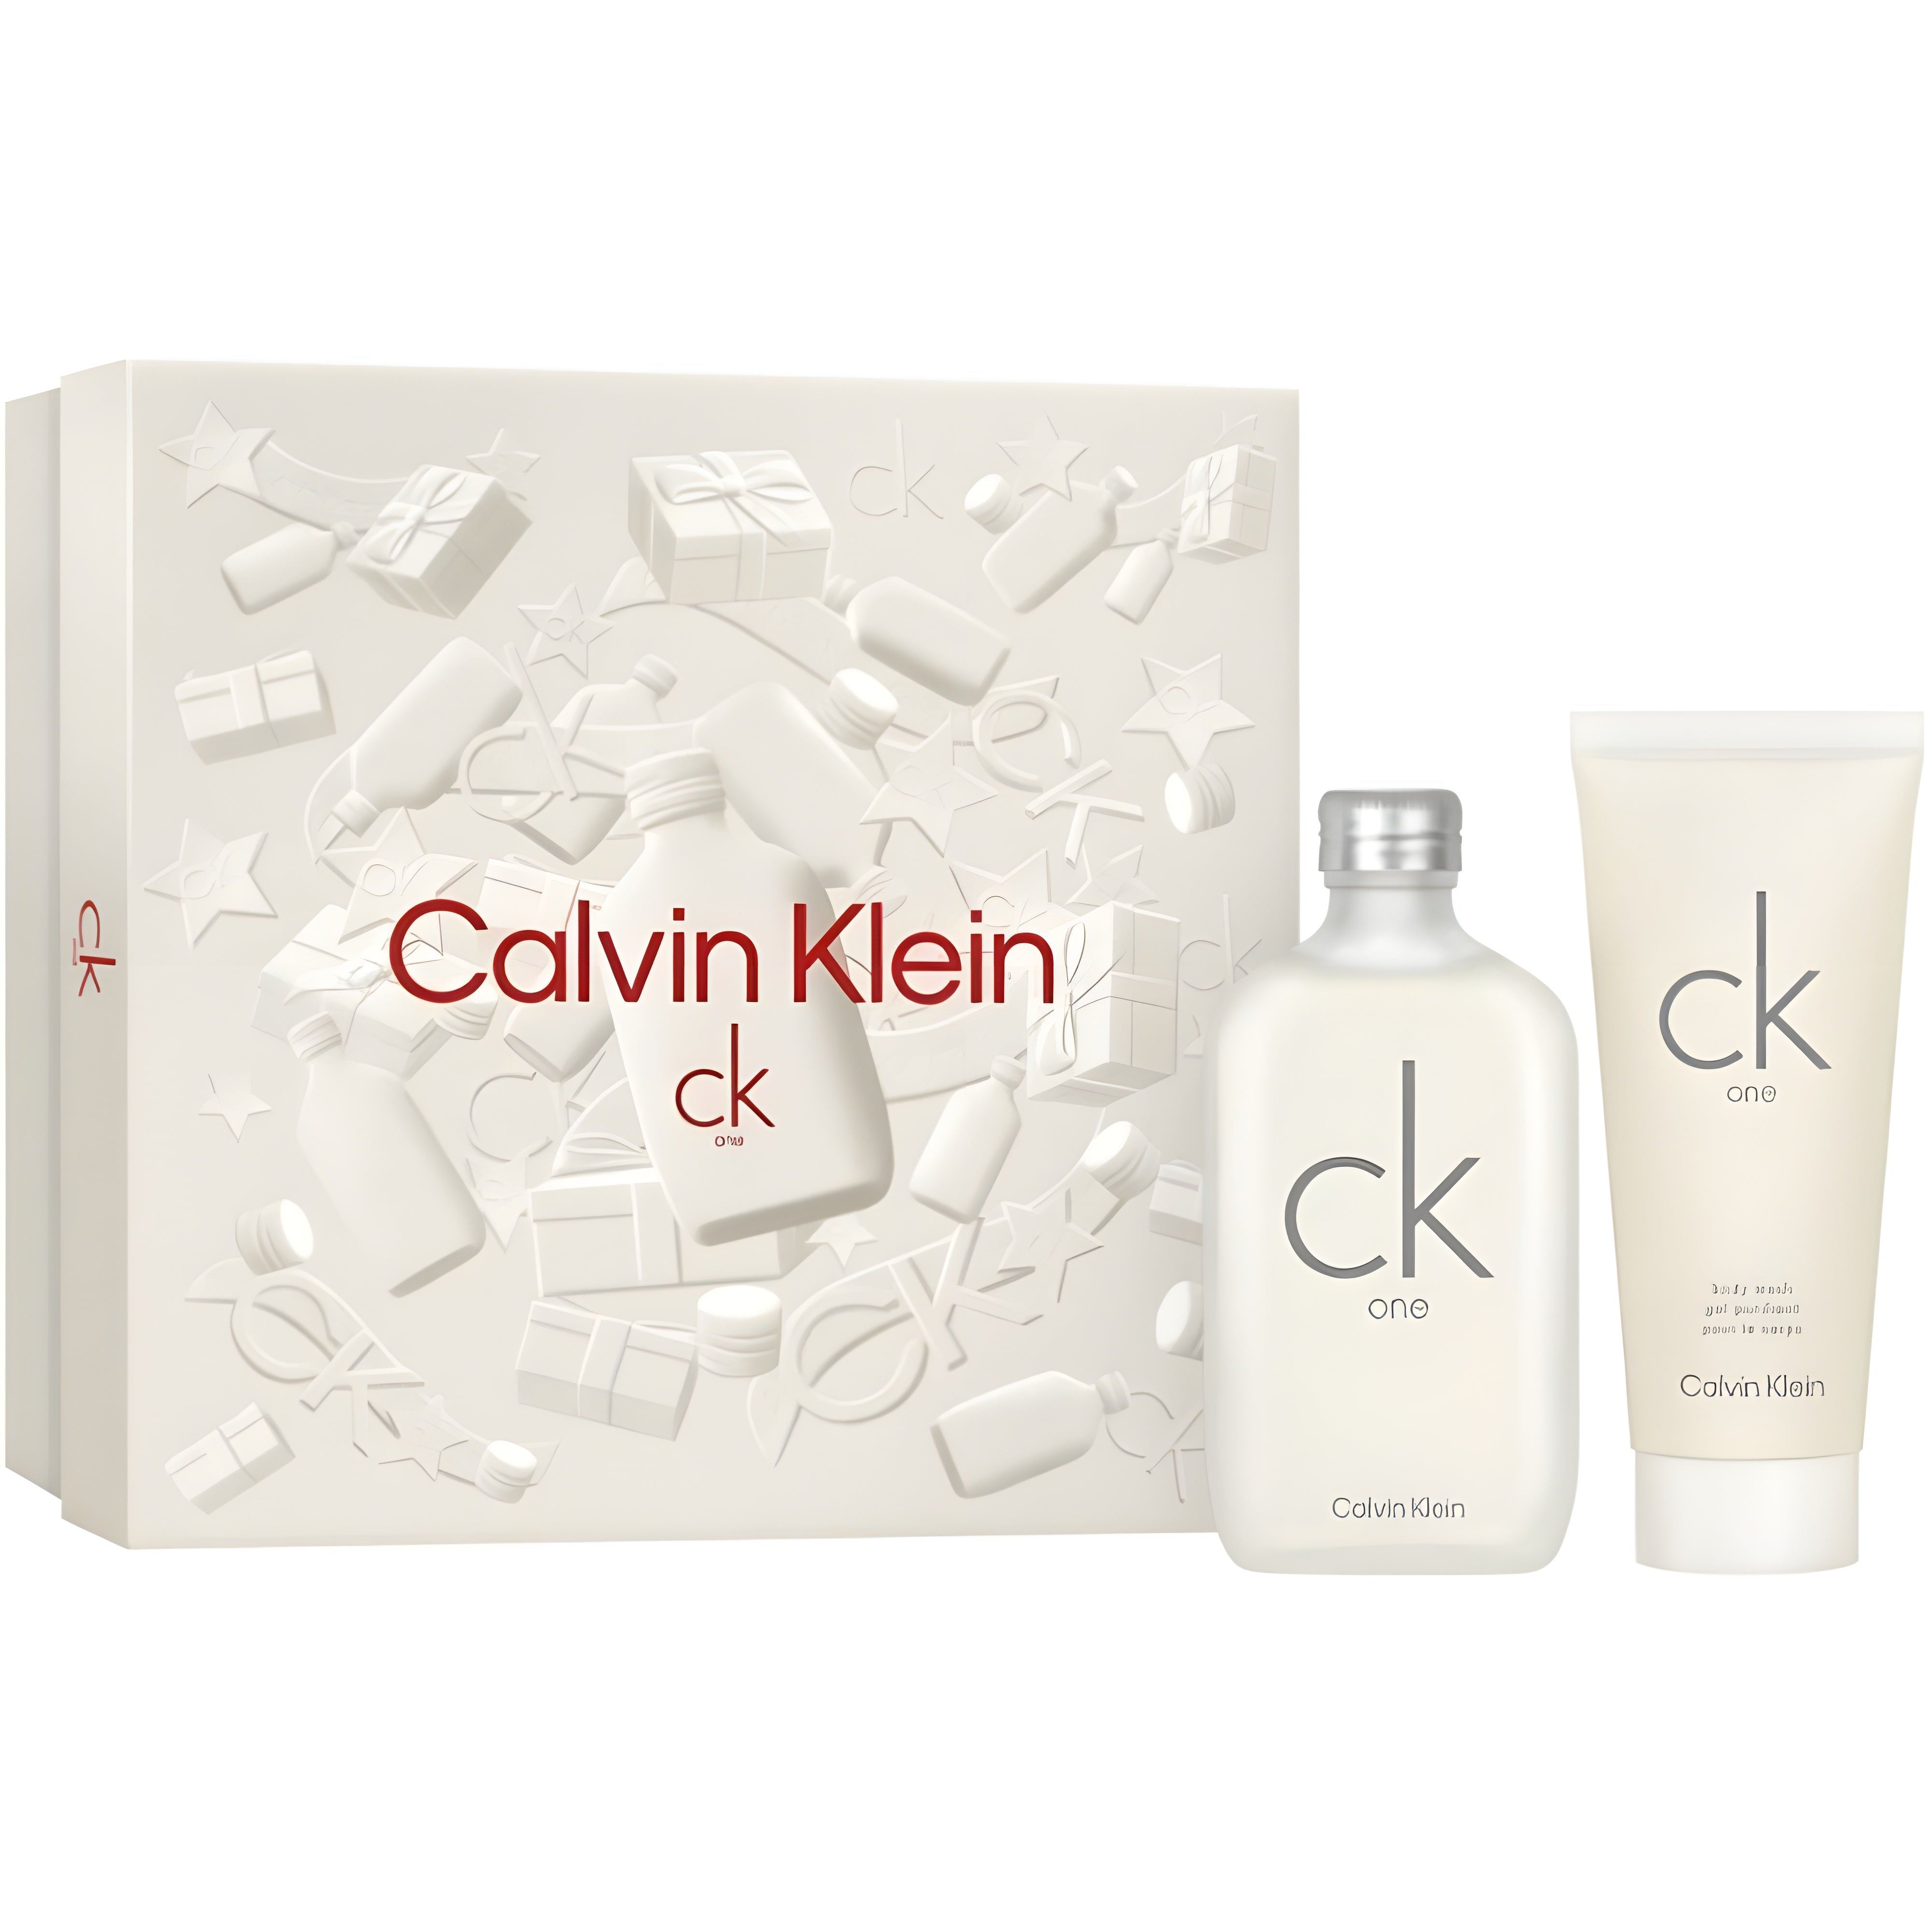 Calvin Klein CK One EDT Body Wash Travel Set | My Perfume Shop Australia